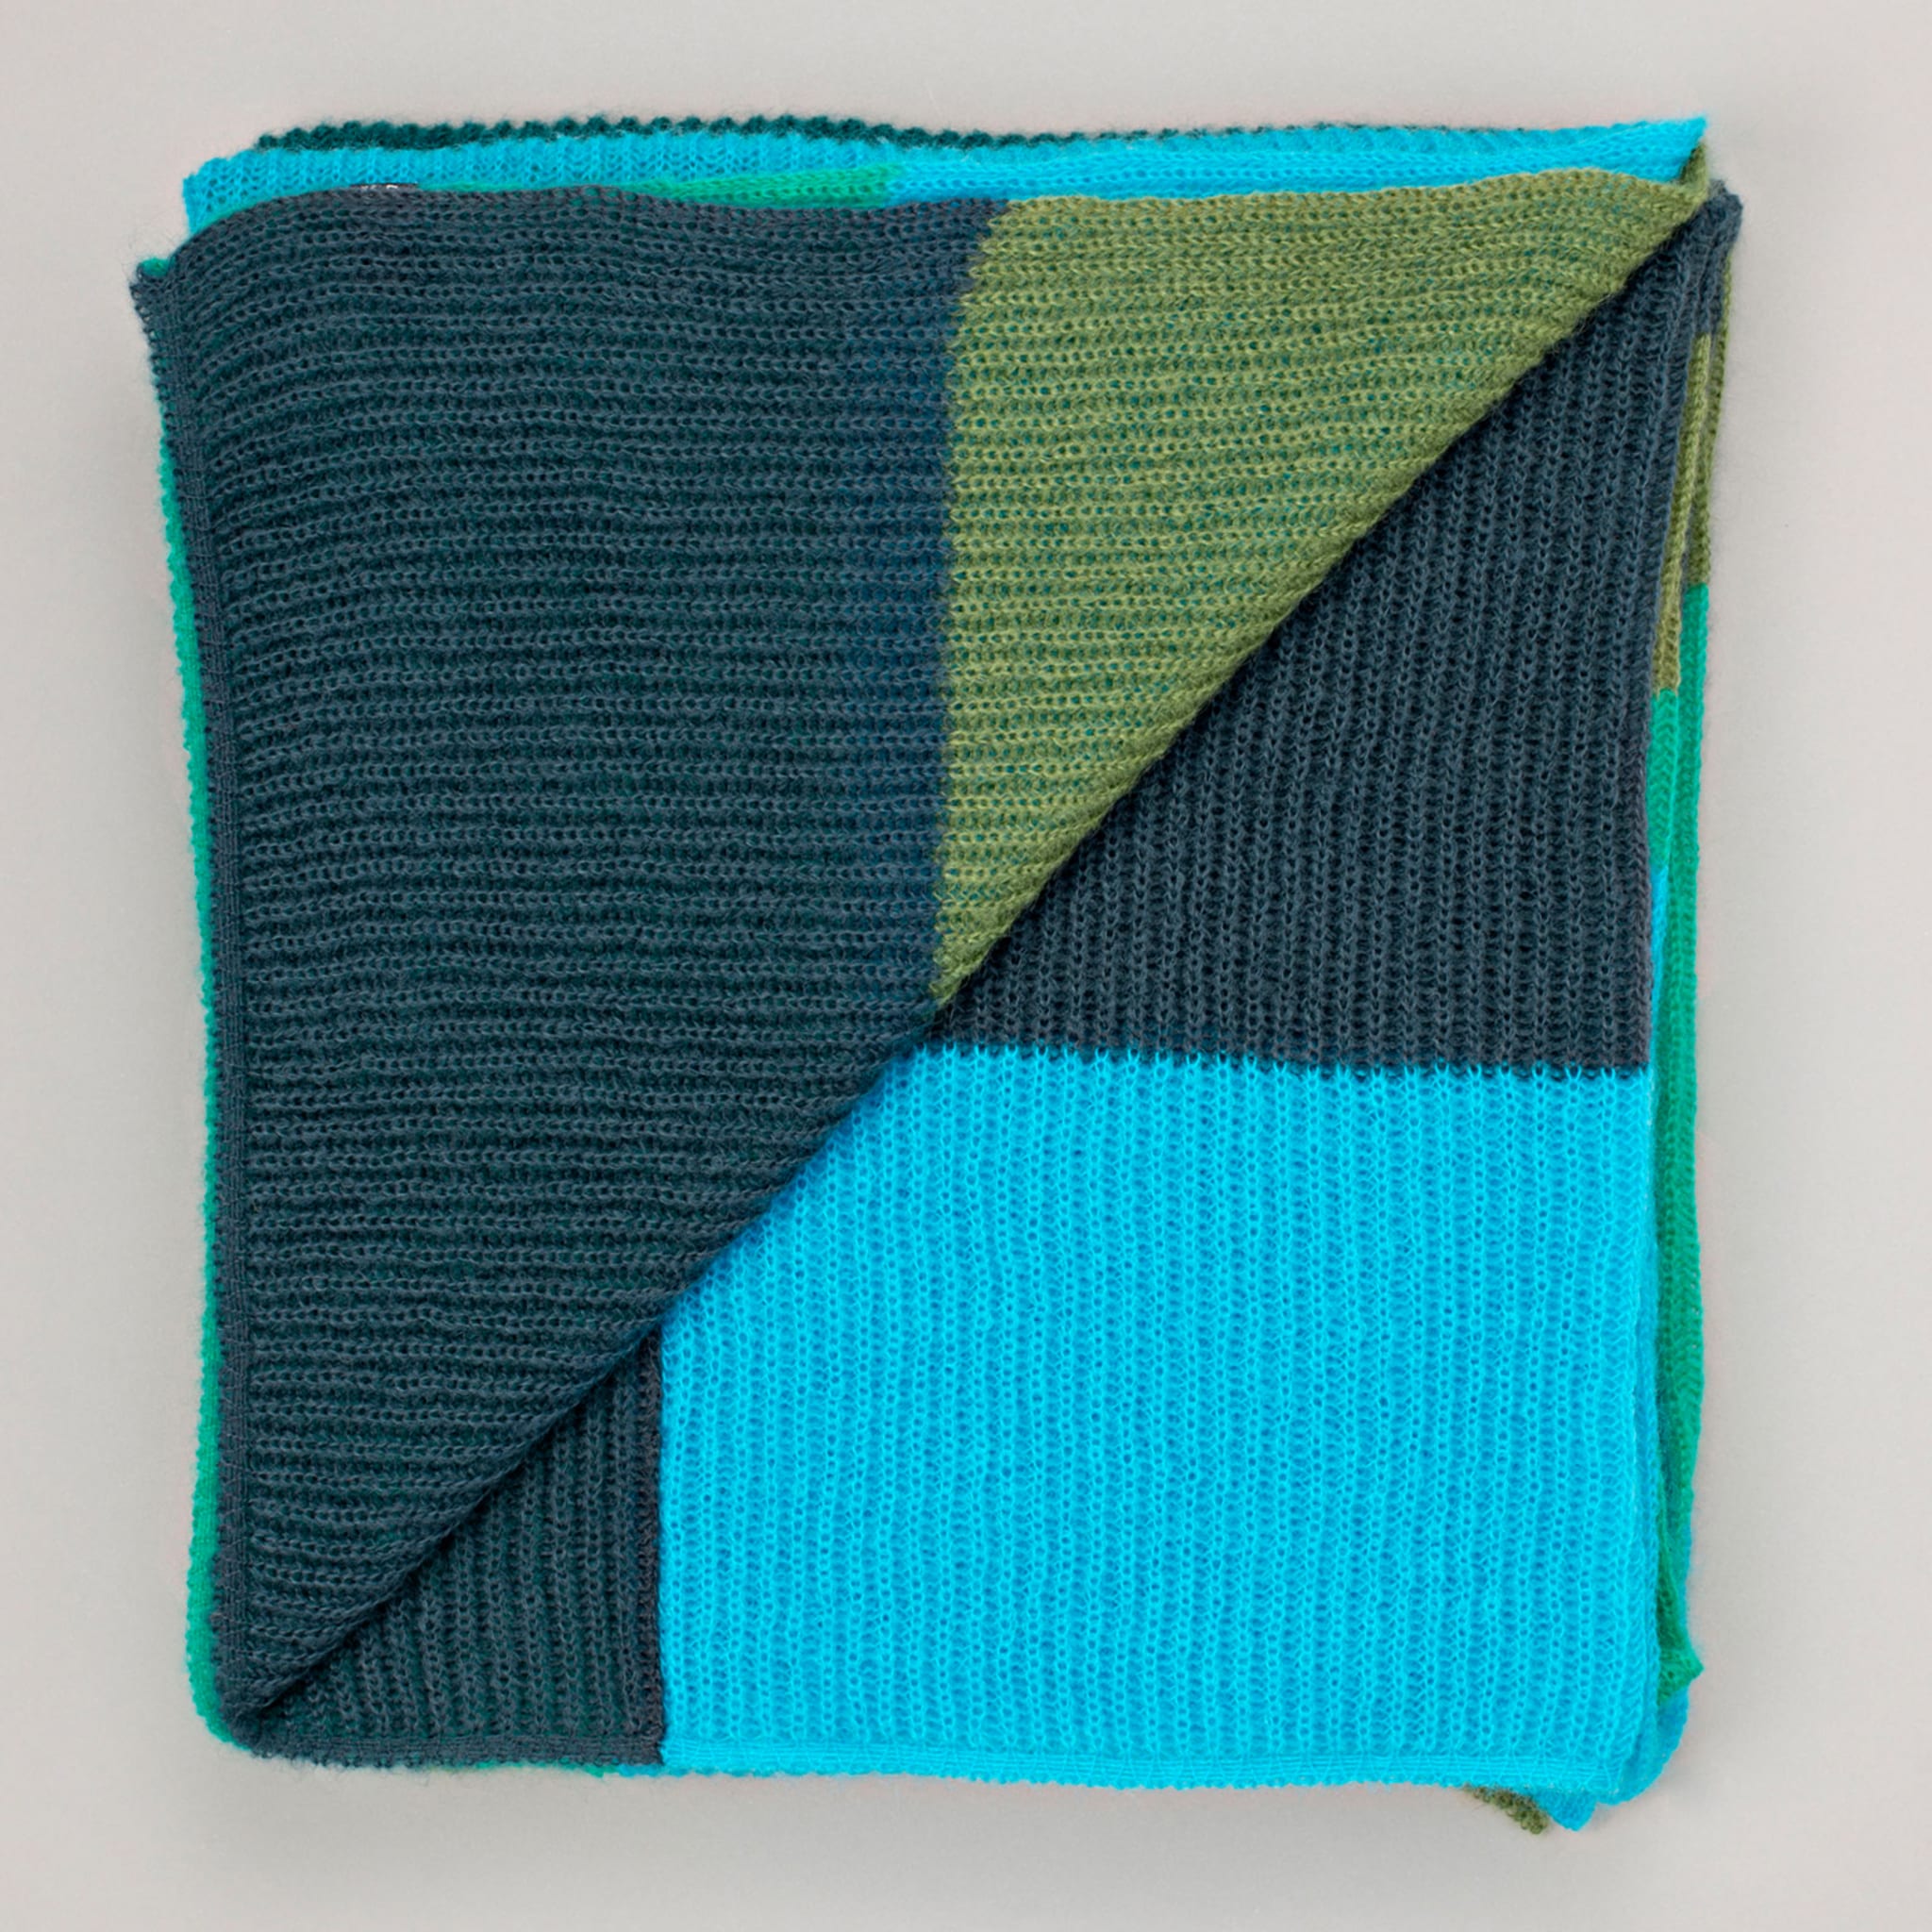 Moh Verde Sila Polychrome Blanket by Emilio Salvatore Leo - Alternative view 1